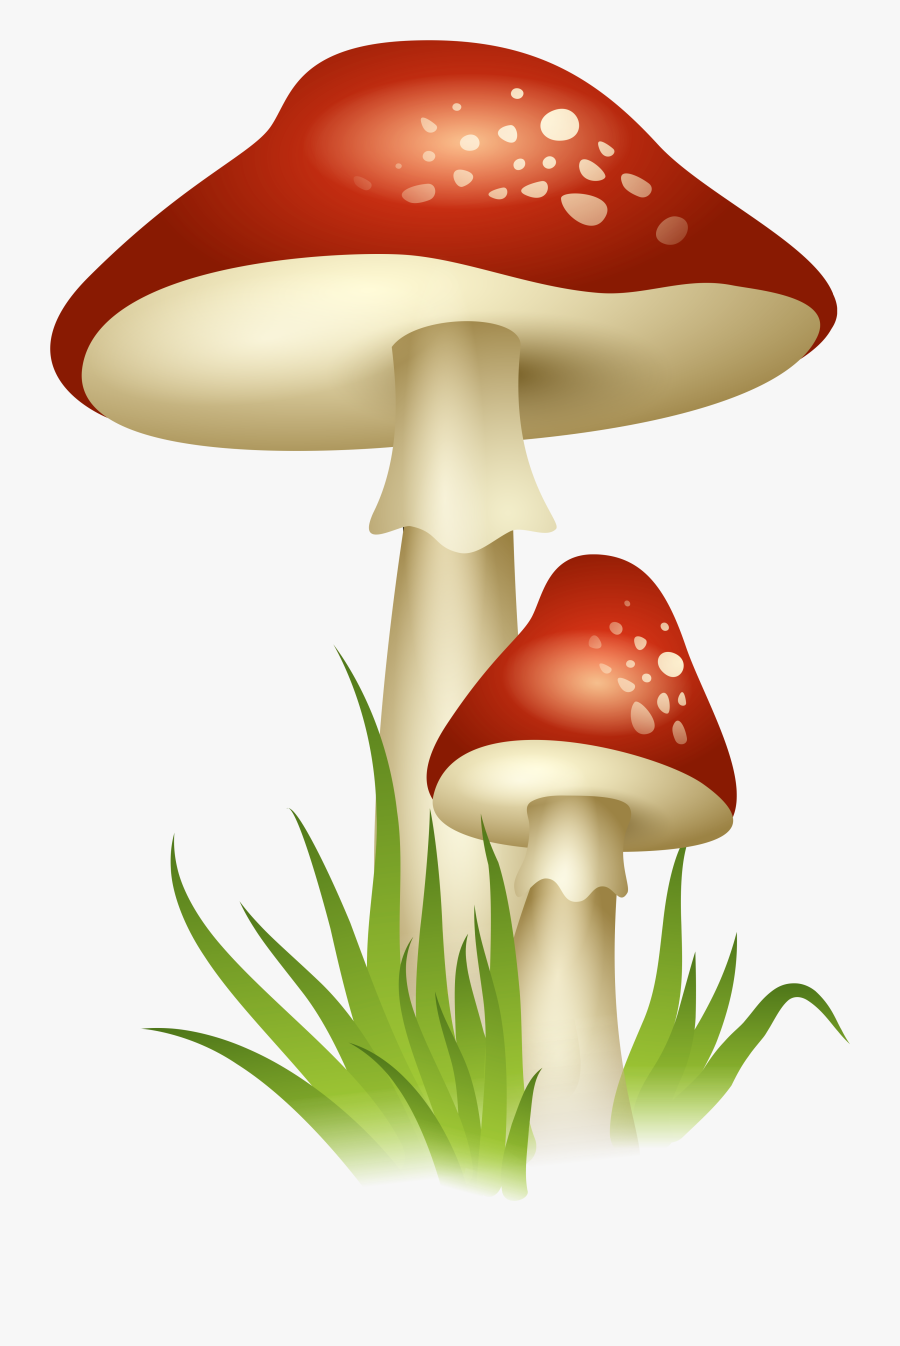 Mushroom Clip Art - Mushroom Clipart Transparent Background, Transparent Clipart